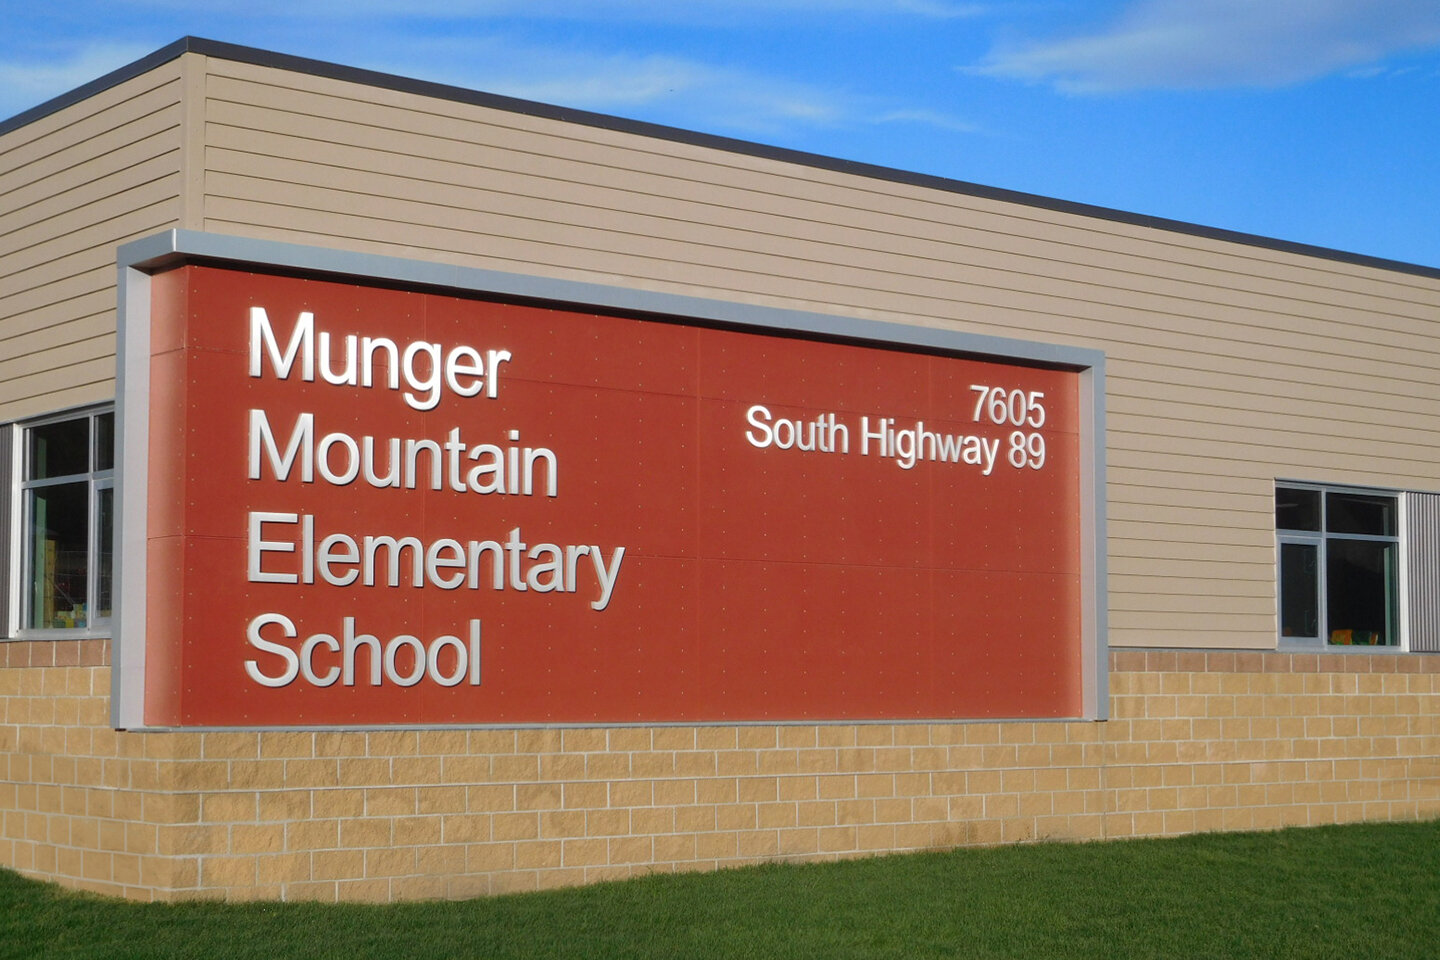 Munger Mountain Elementary School signage